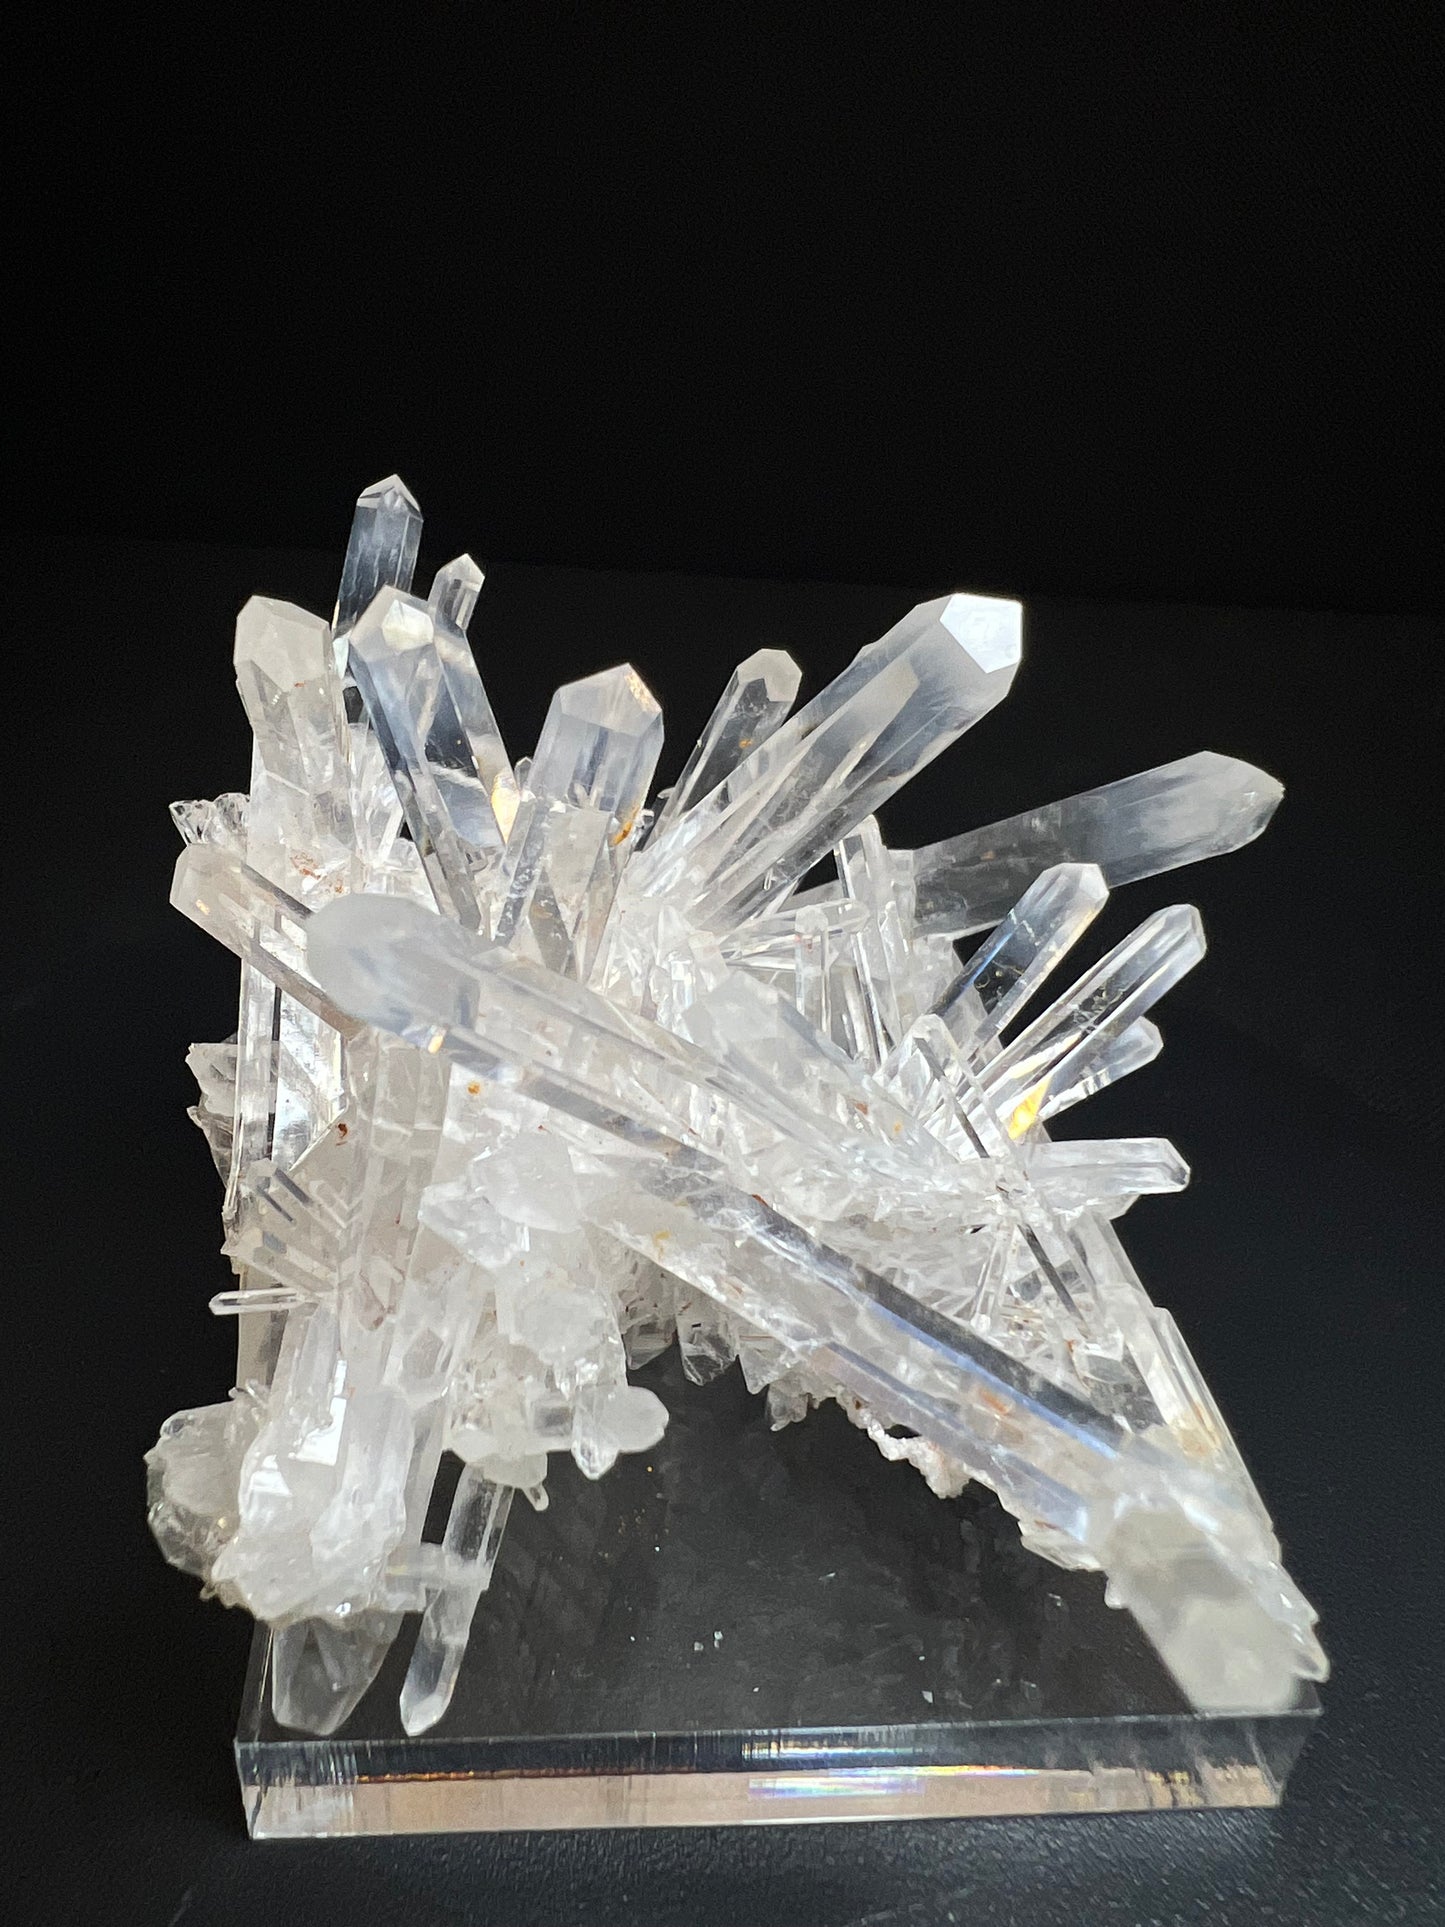 Pristine Clear Quartz Cluster From Cabiche, Boyaca, Columbia- Statement Piece, Crystal Healing, Collectors Piece